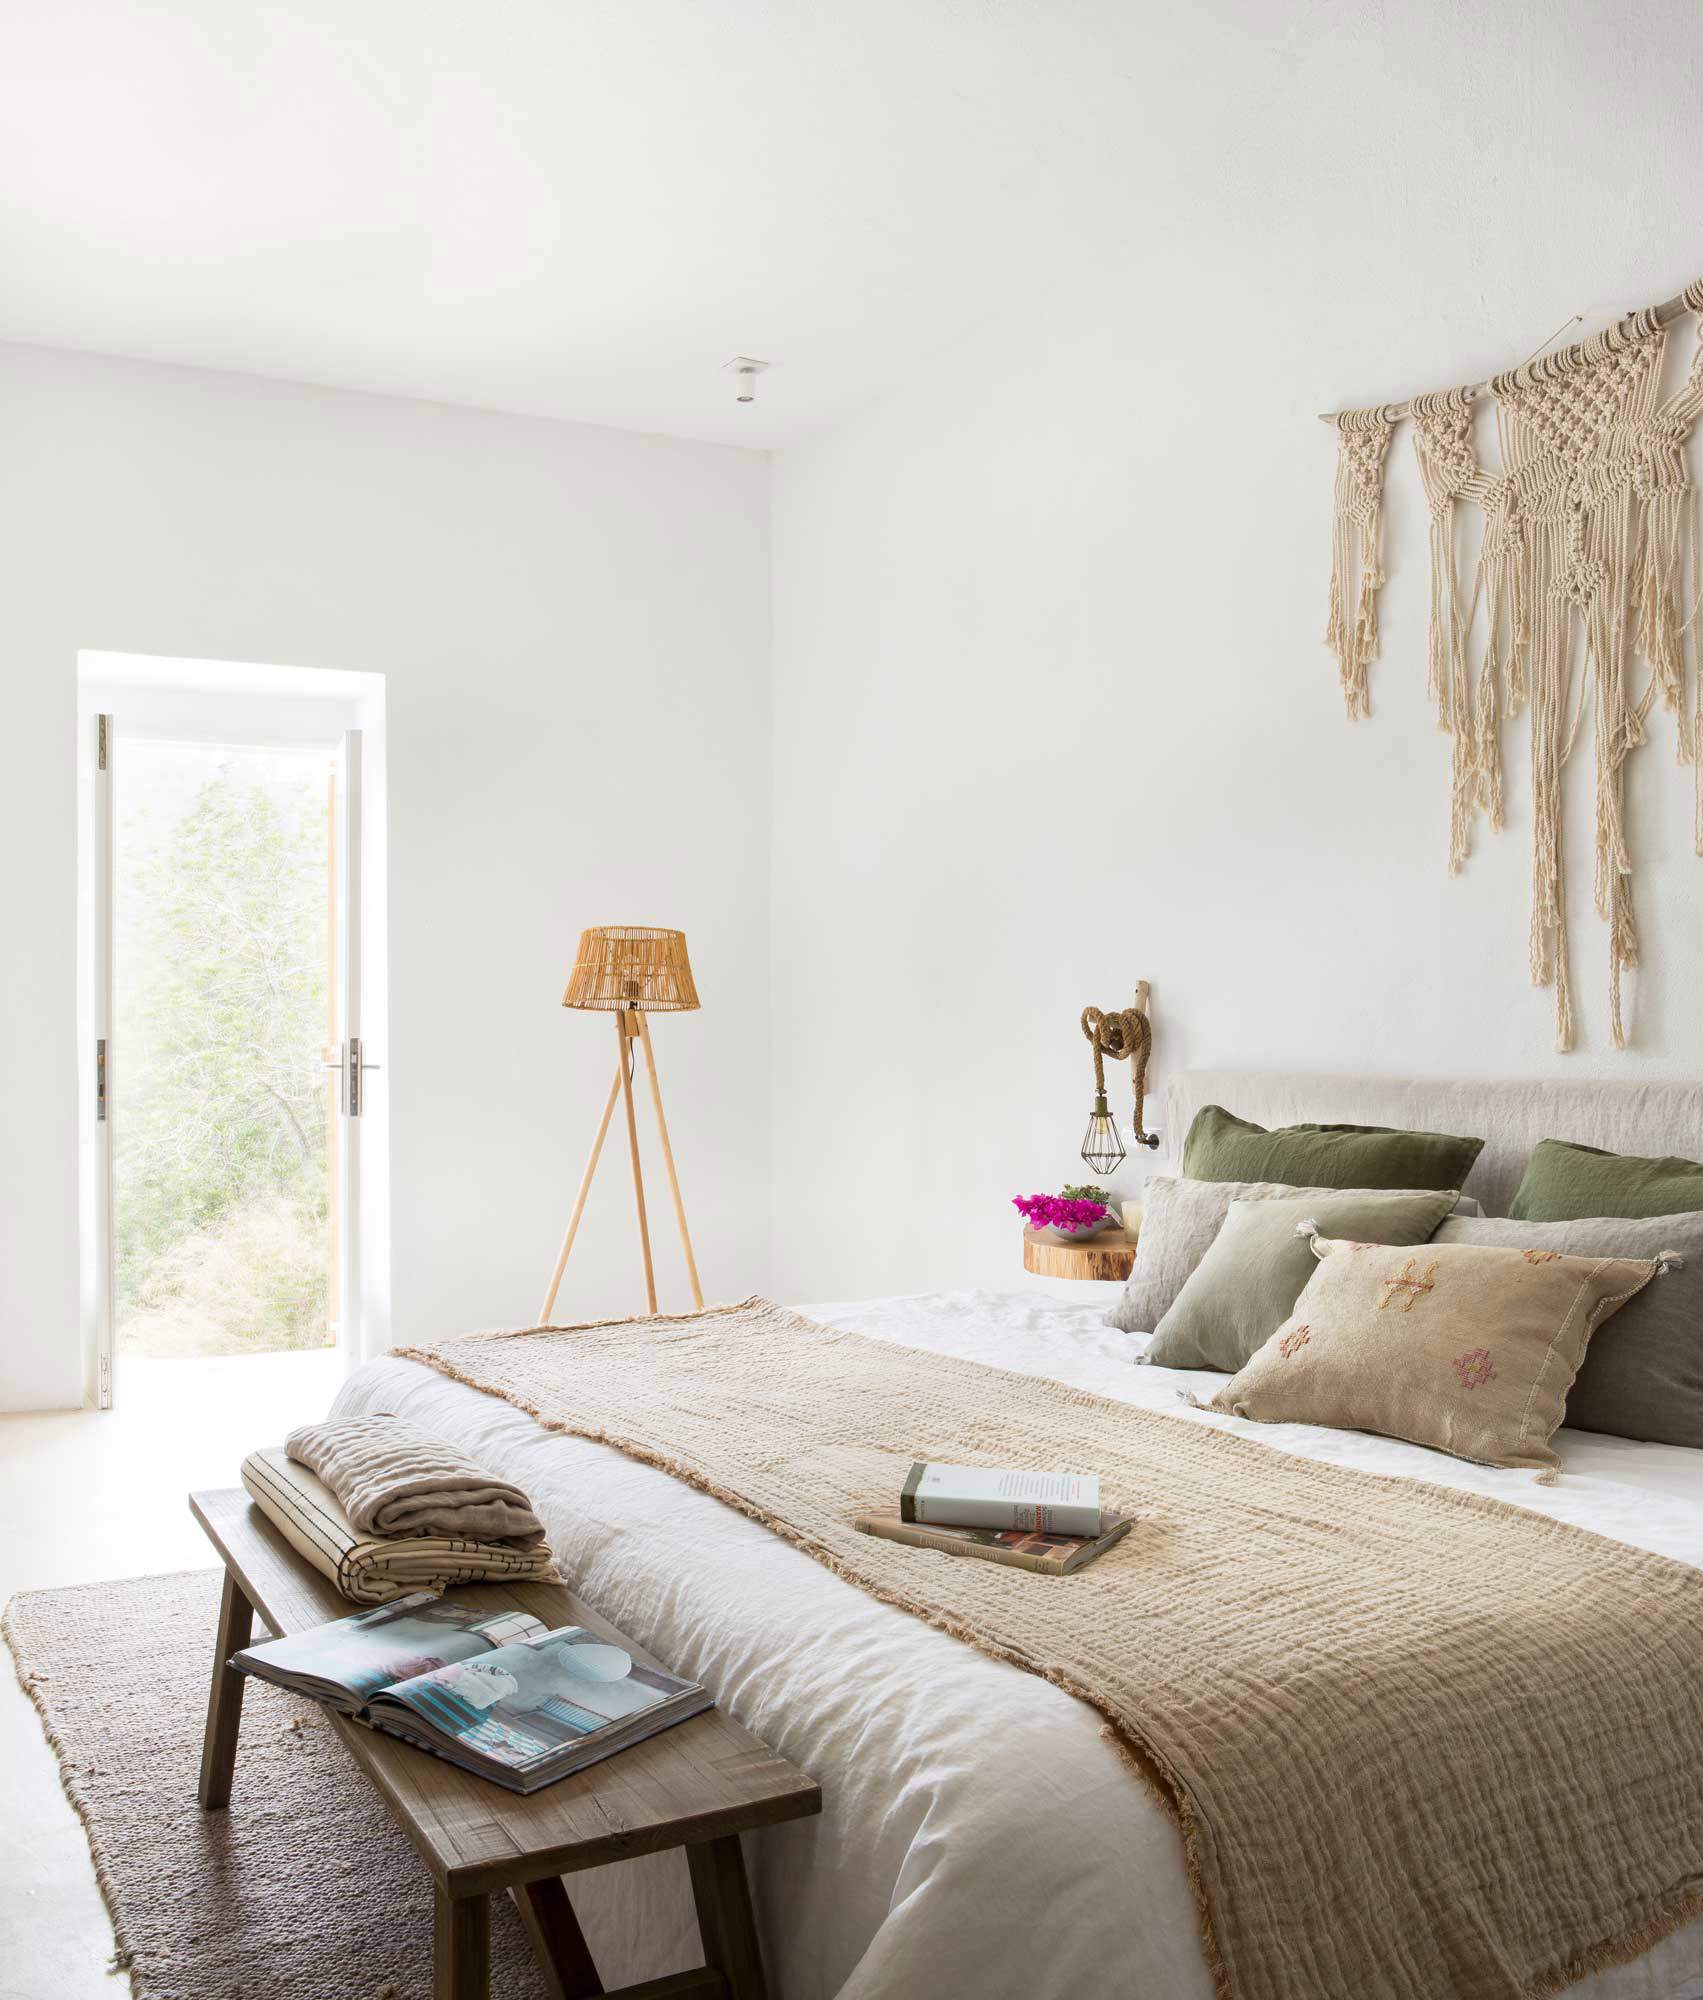 Dormitorio decorado en tonos neutros con cabecero de macramé.